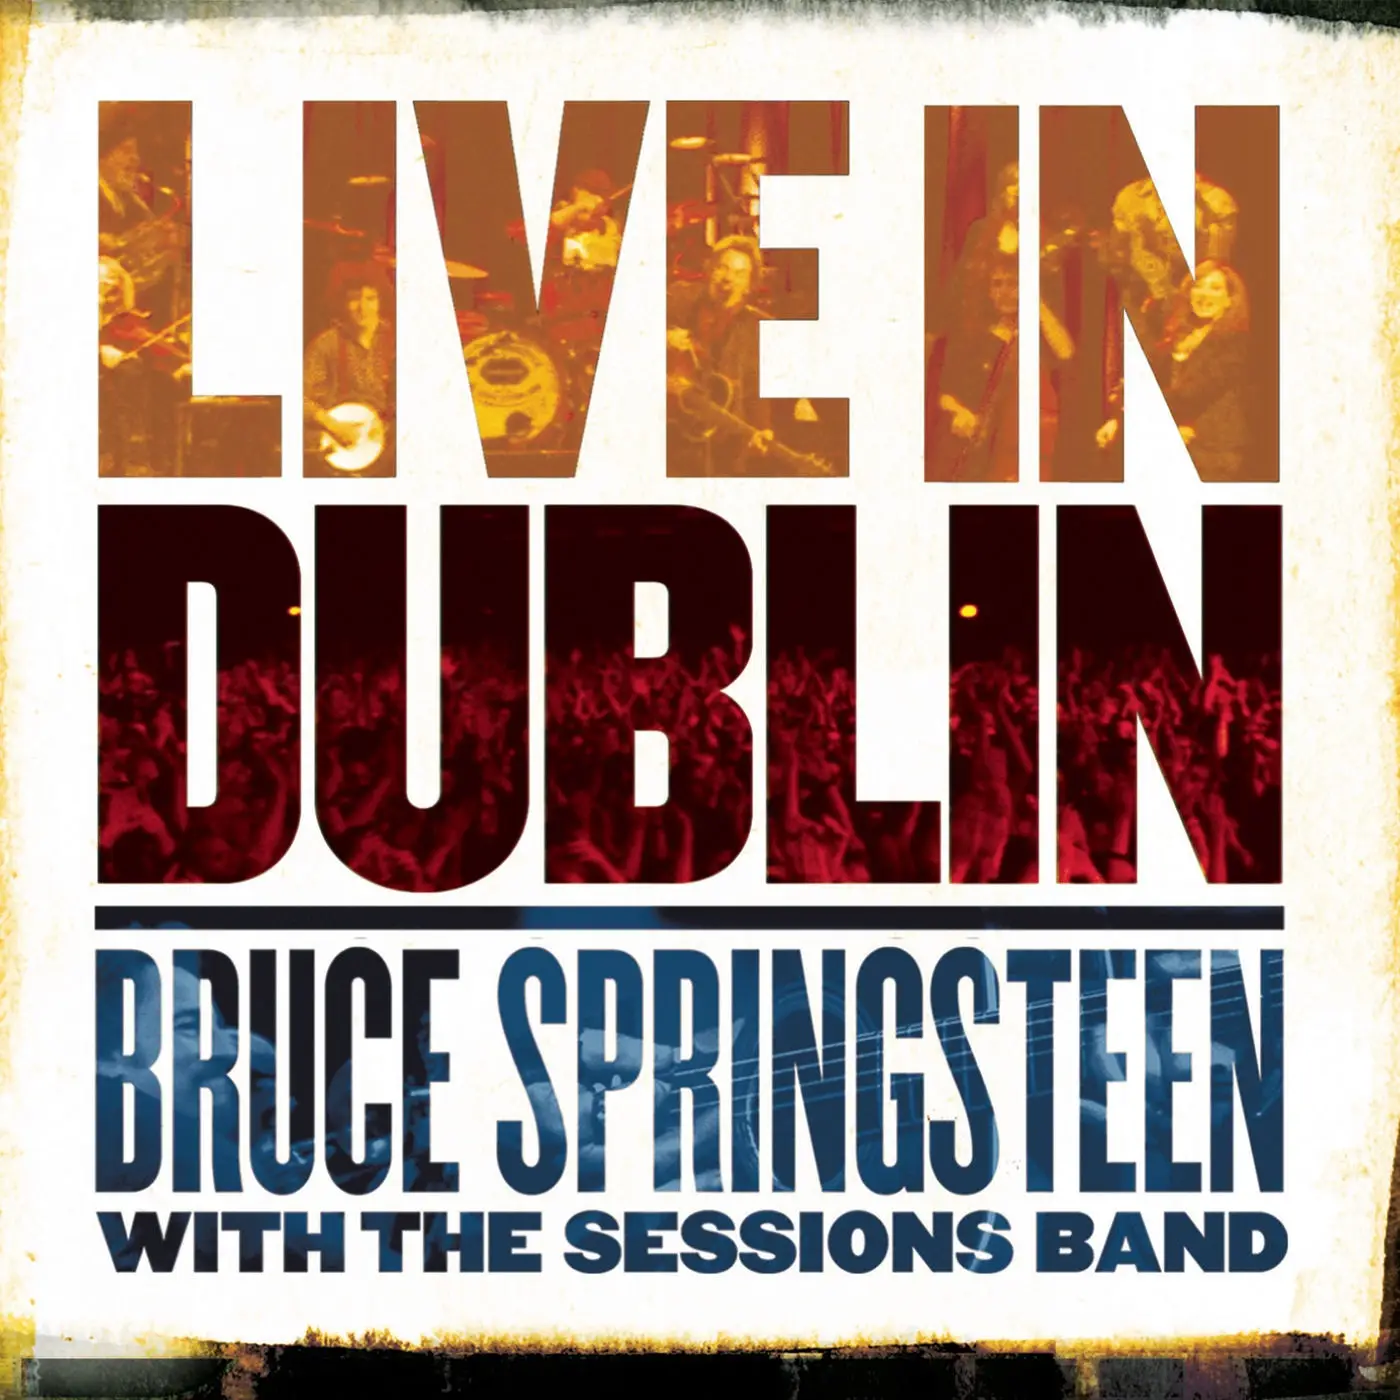 bruce springsteen tour dates ireland